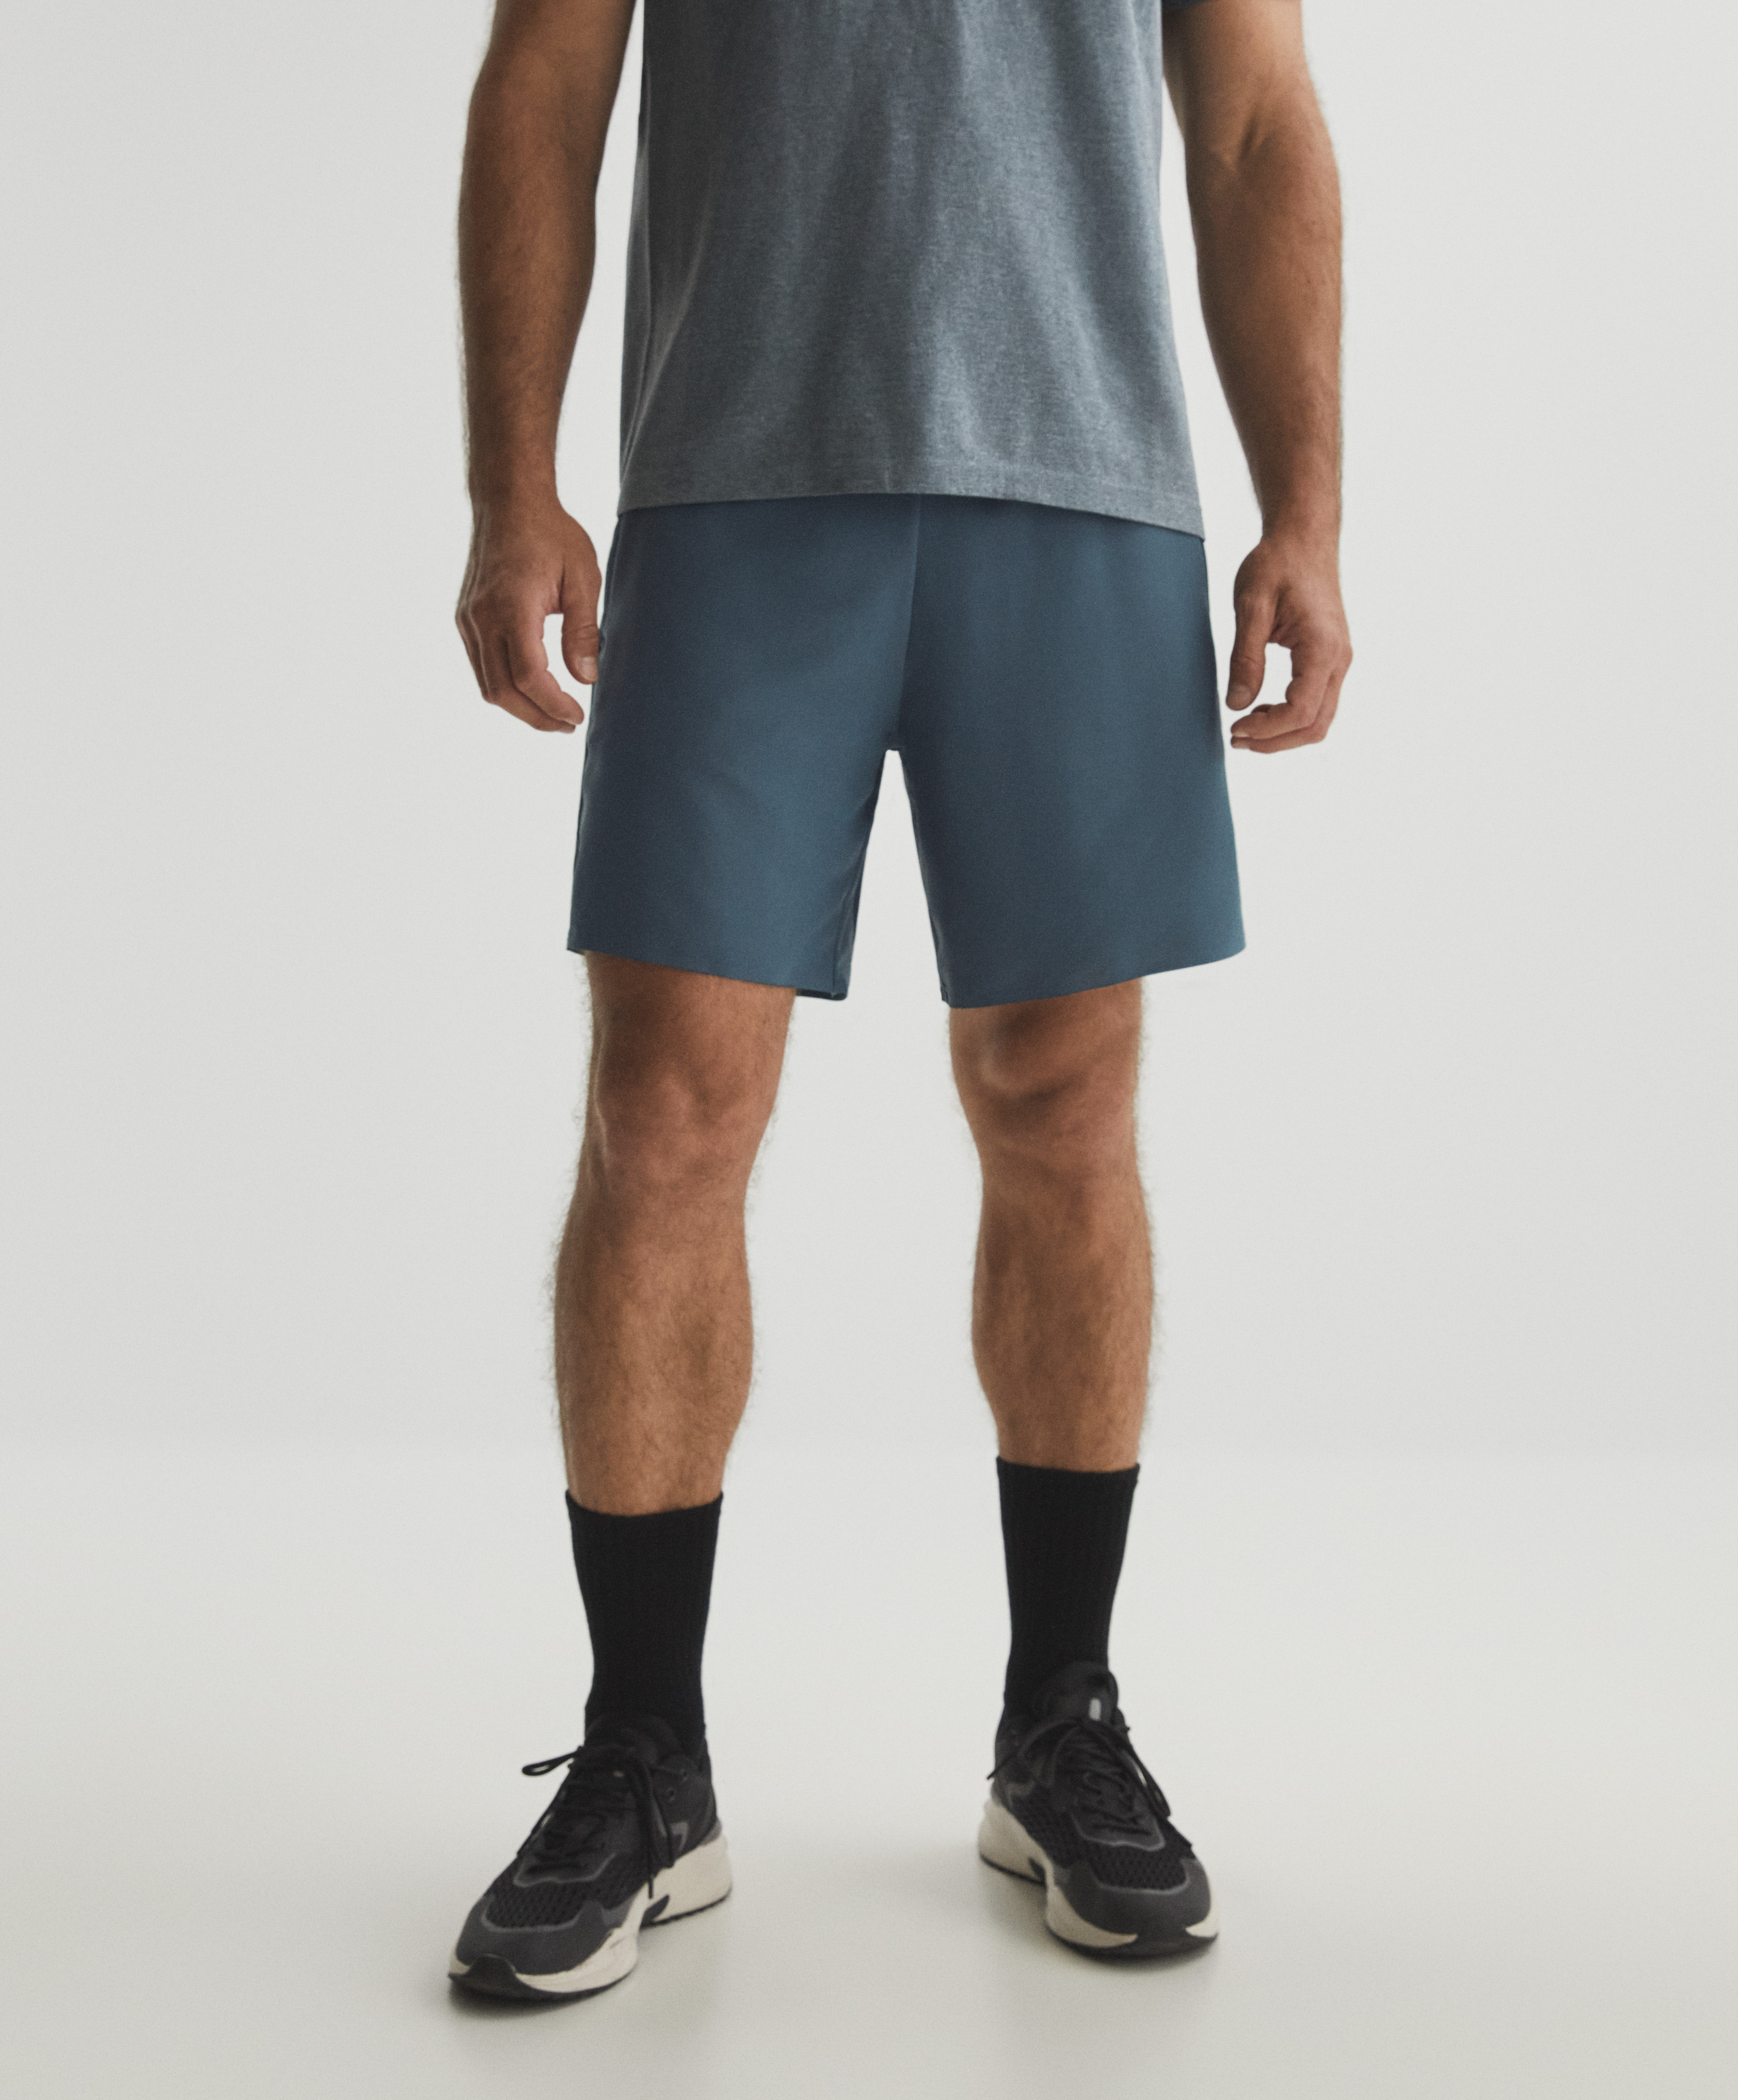 18 cm 2-in-1 training shorts